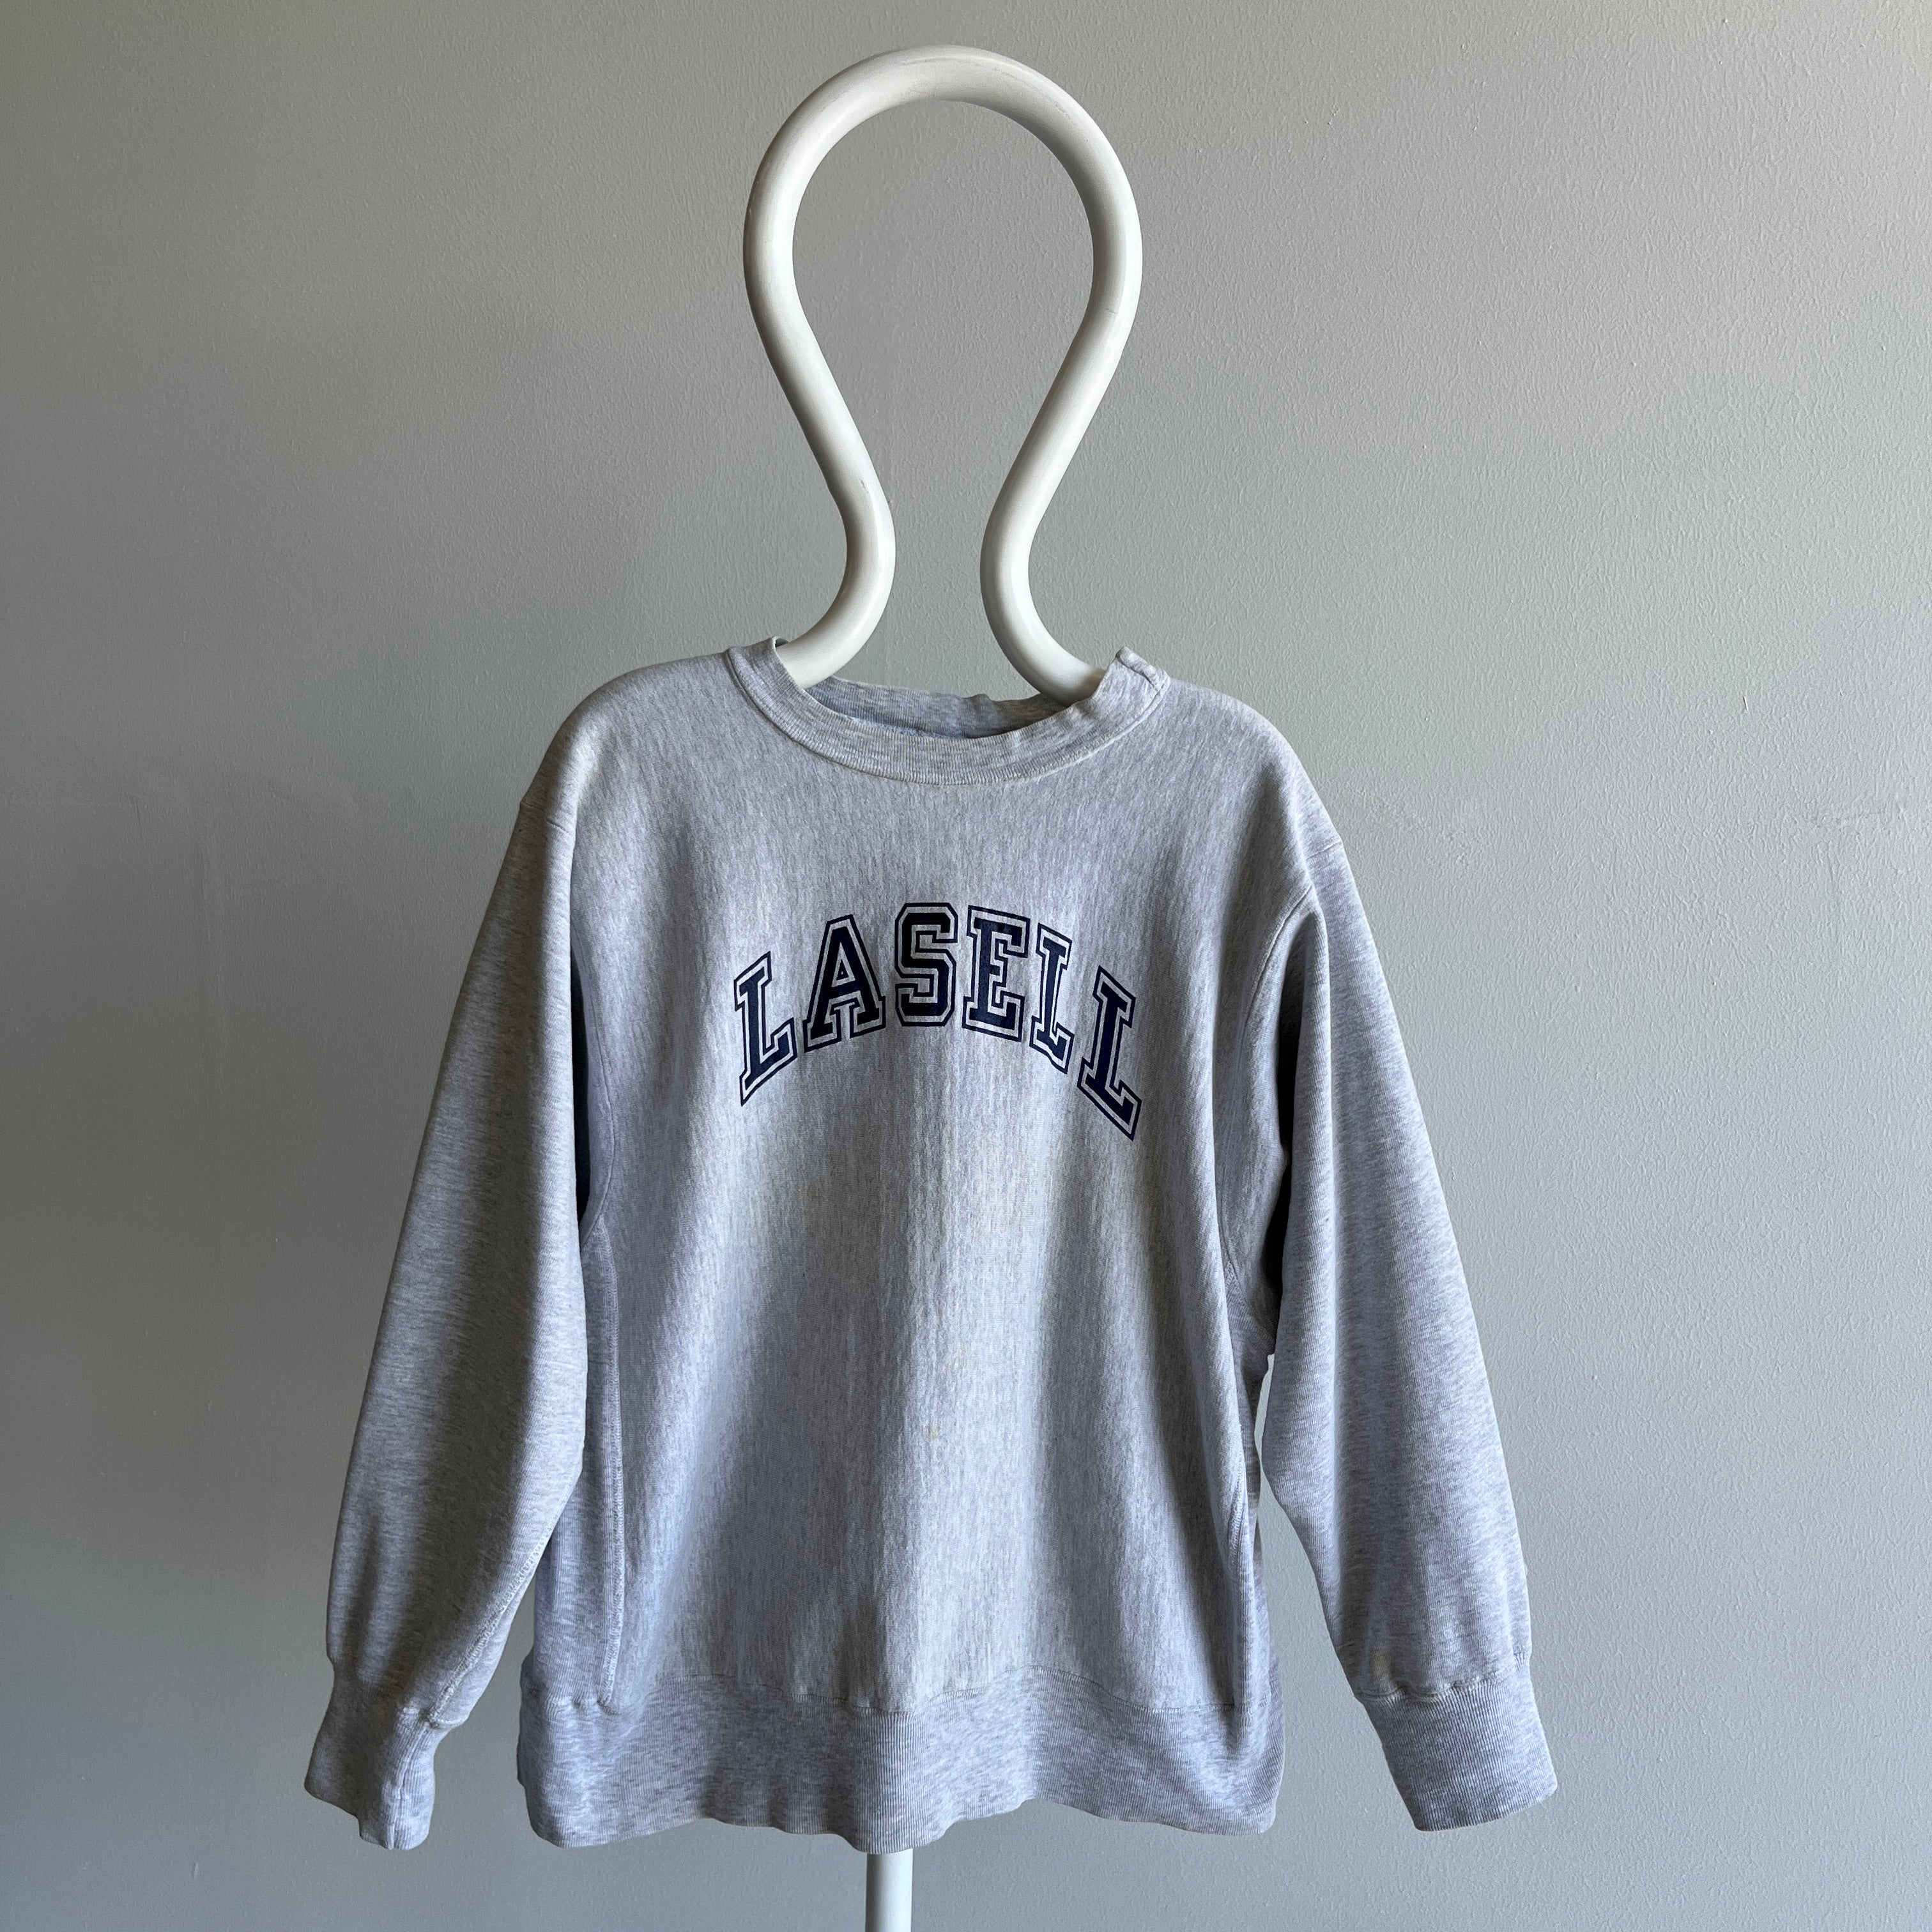 1980/90s Lasell Reverse Weave USA Made Champion Nicely Worn Heavyweight Sweatshirt